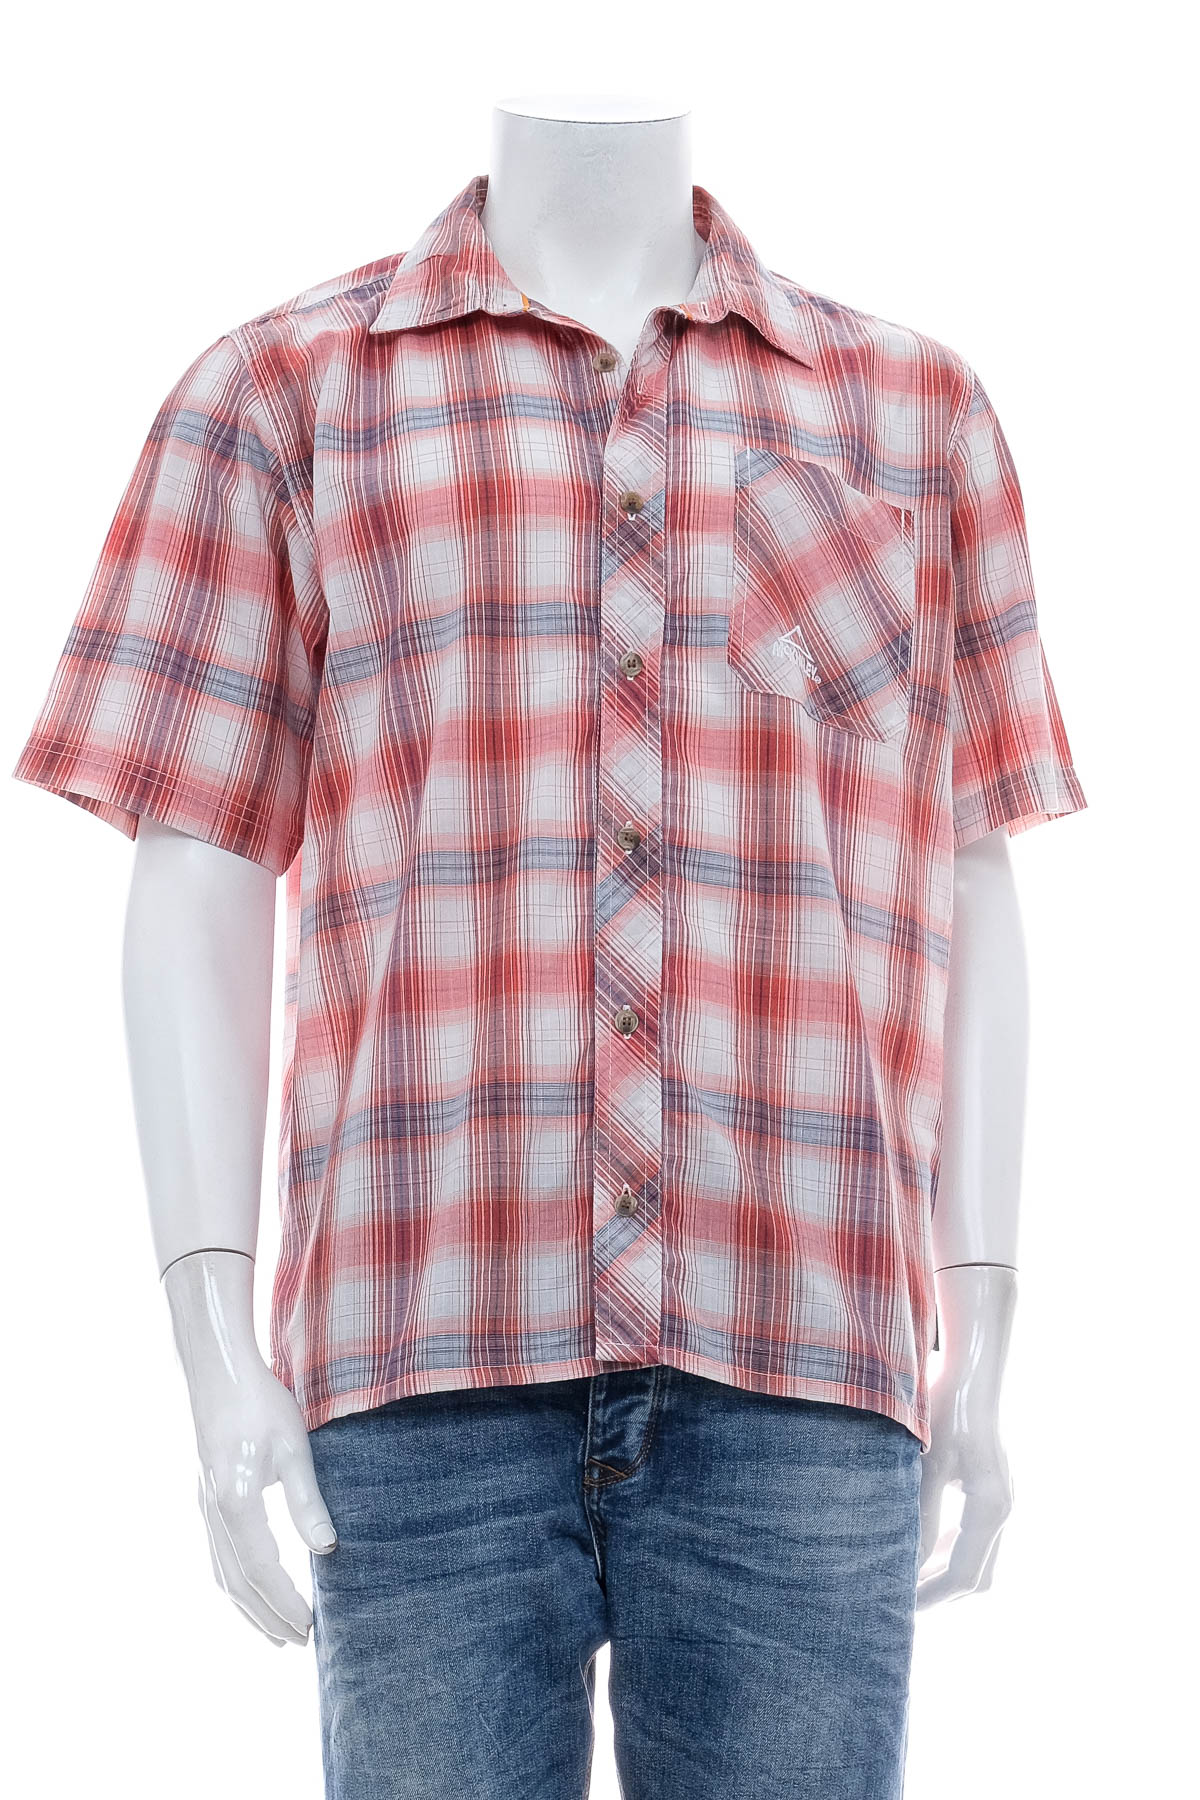 Men's shirt - McKinley - 0